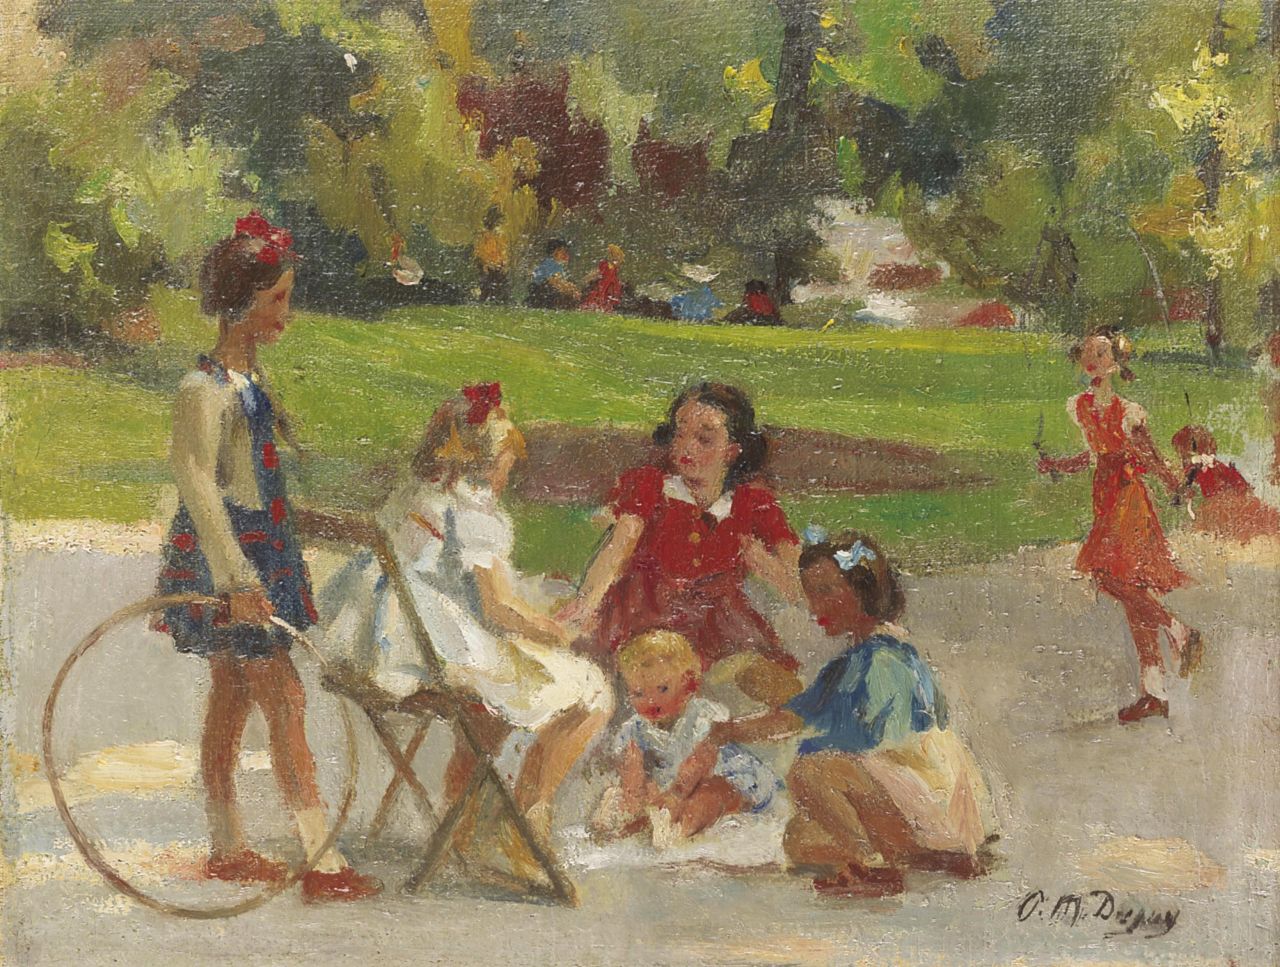 Dupuy P.M.  | Paul Michel Dupuy, Spielende Mädchen im Parc Monceau, Paris, Öl auf Leinwand 28,6 x 37,2 cm, Unterzeichnet r.u.